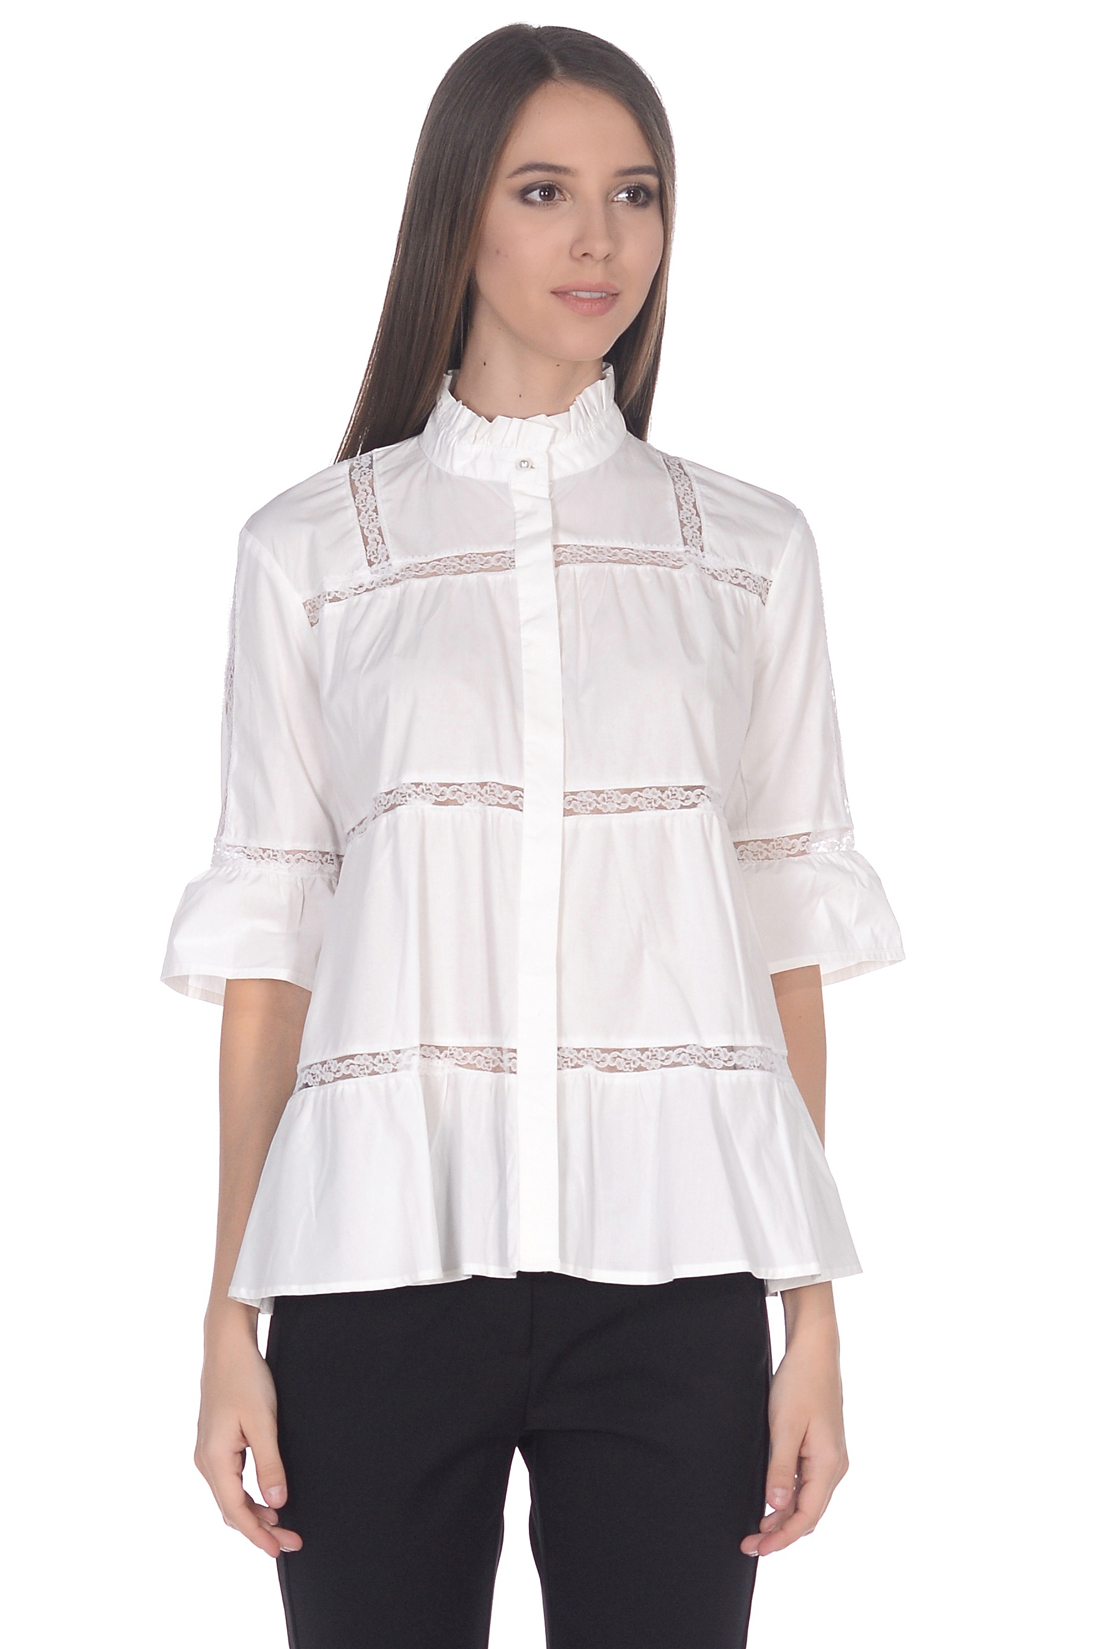 Ярусная блузка с кружевными прошвами (арт. baon B179044), размер XL, цвет белый Ярусная блузка с кружевными прошвами (арт. baon B179044) - фото 4